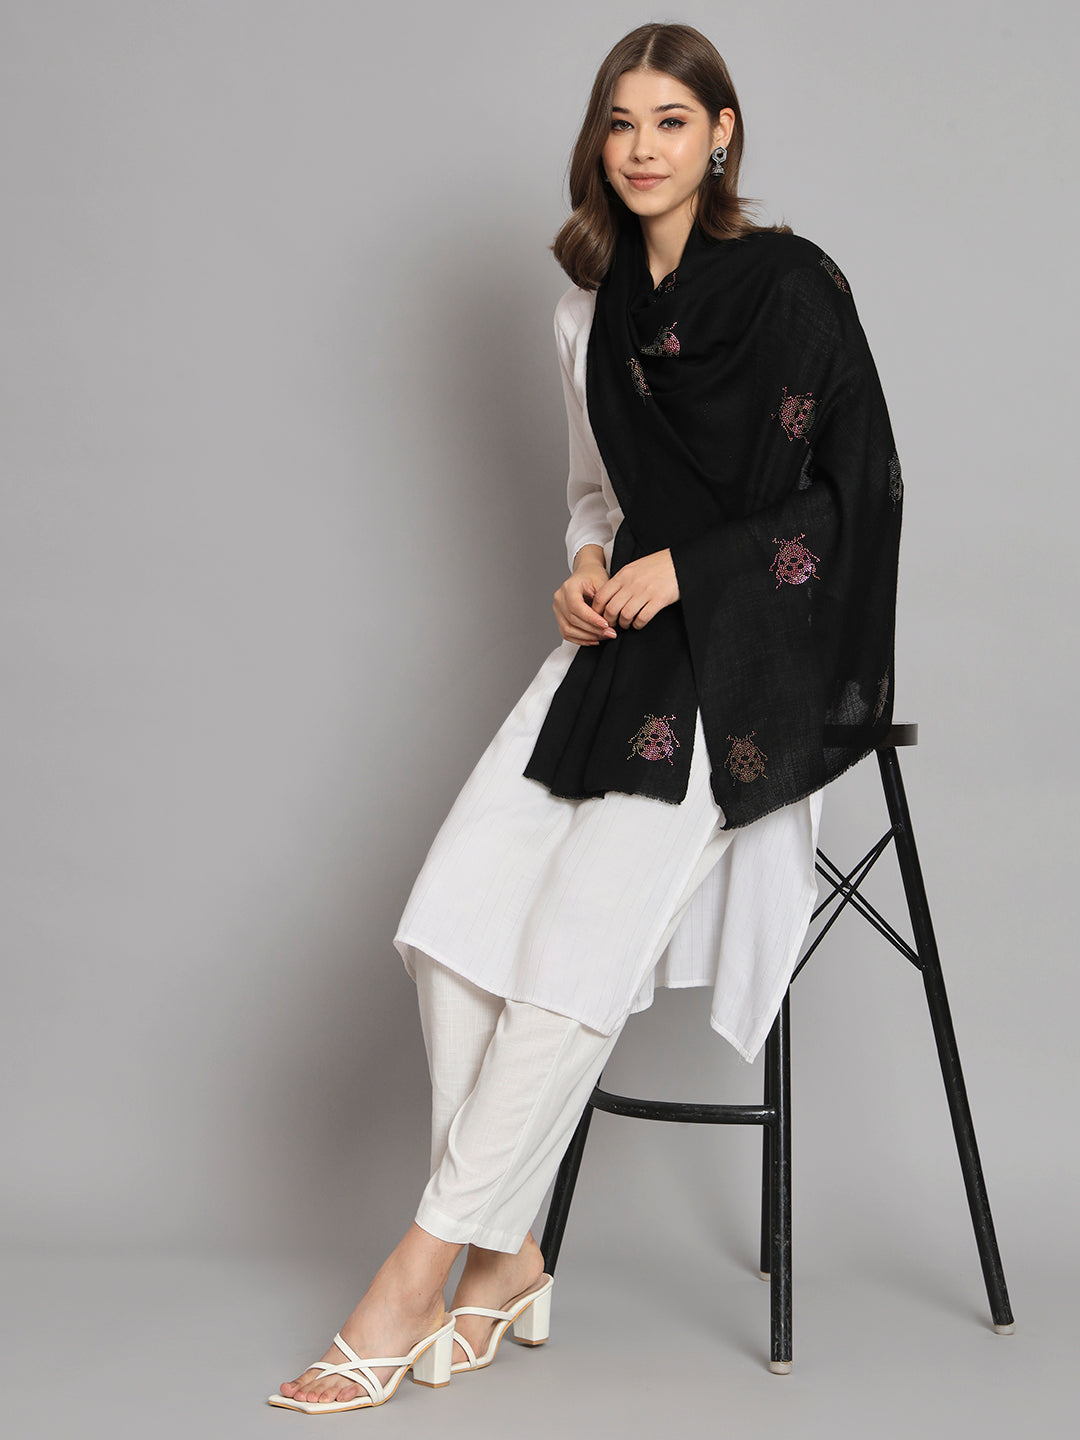 woolen shawl for ladies, pashmina scarves